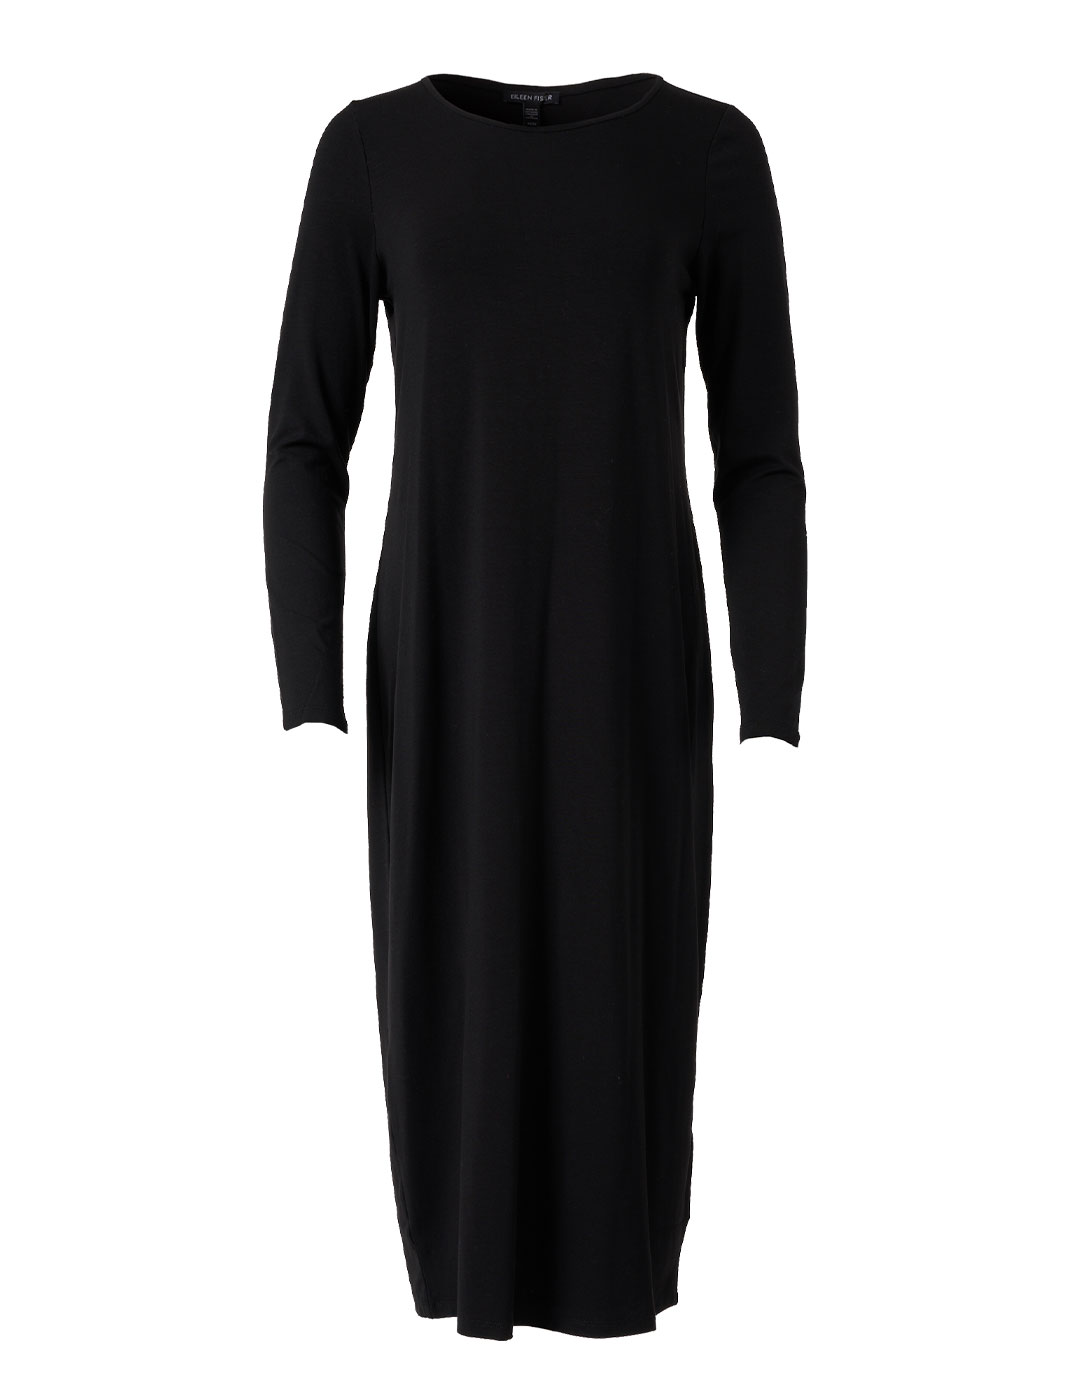 Black Stretch Jersey Dress | Eileen Fisher